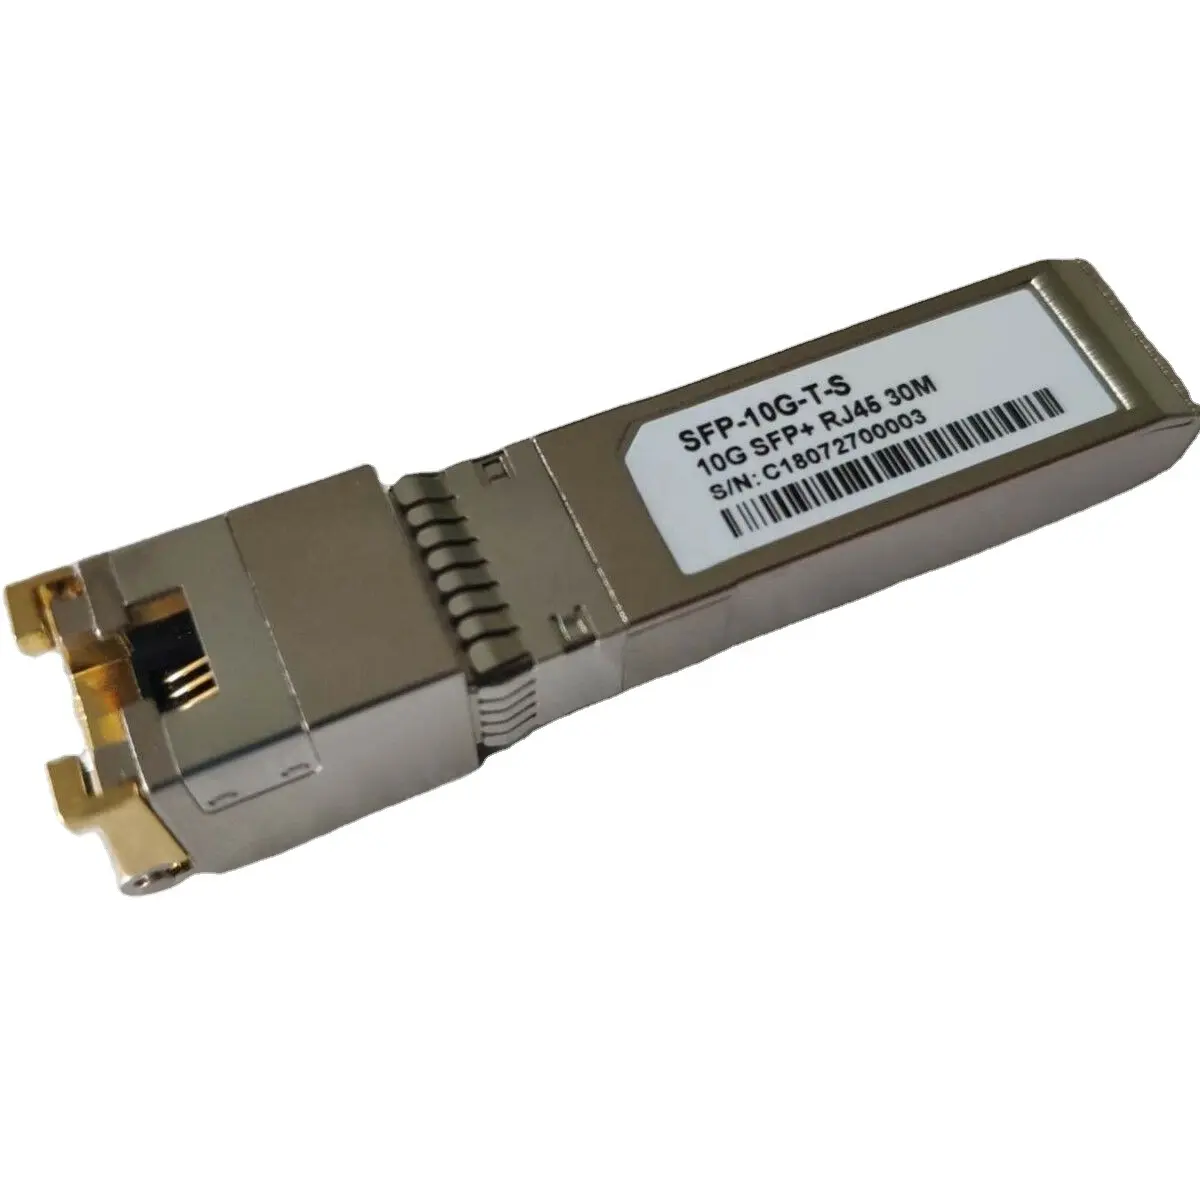 SFP-10G-T-S Compatible 10GBASE-T SFP+ Copper RJ45 Transceiver